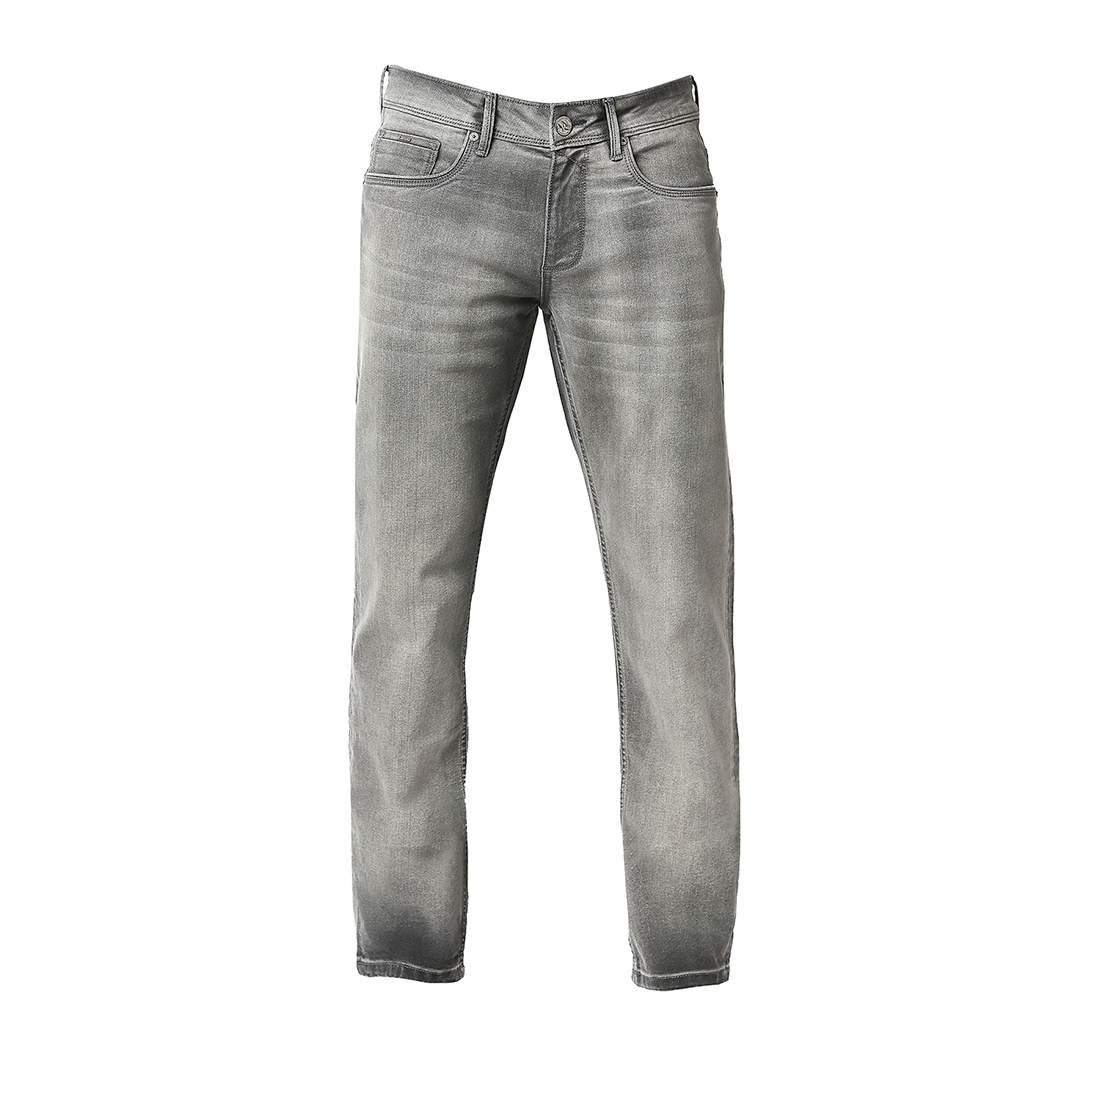 Basics | Men's Grey Cotton Blend Solid Jeans 5